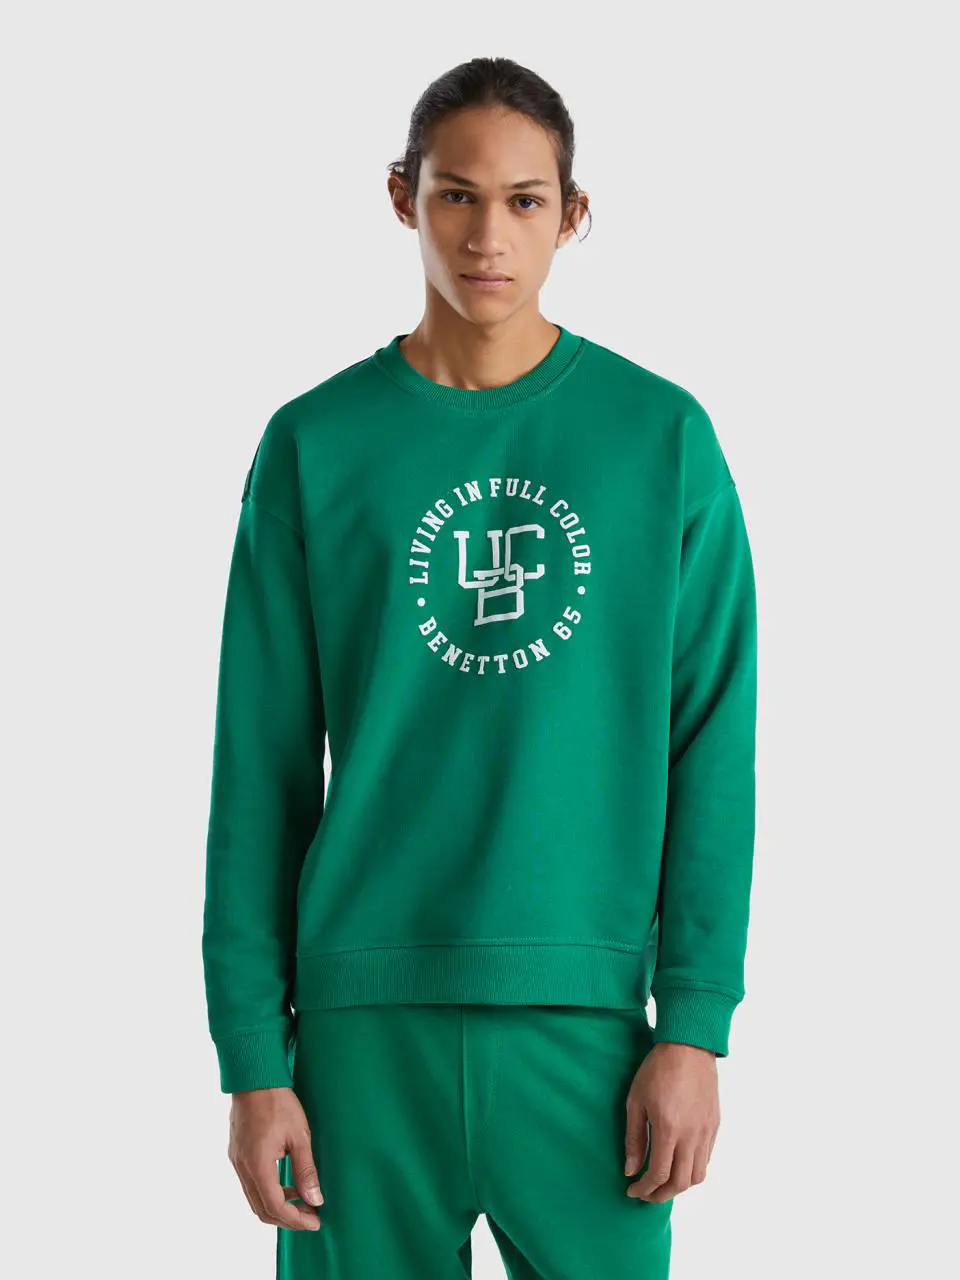 Benetton crew neck sweatshirt with logo print. 1